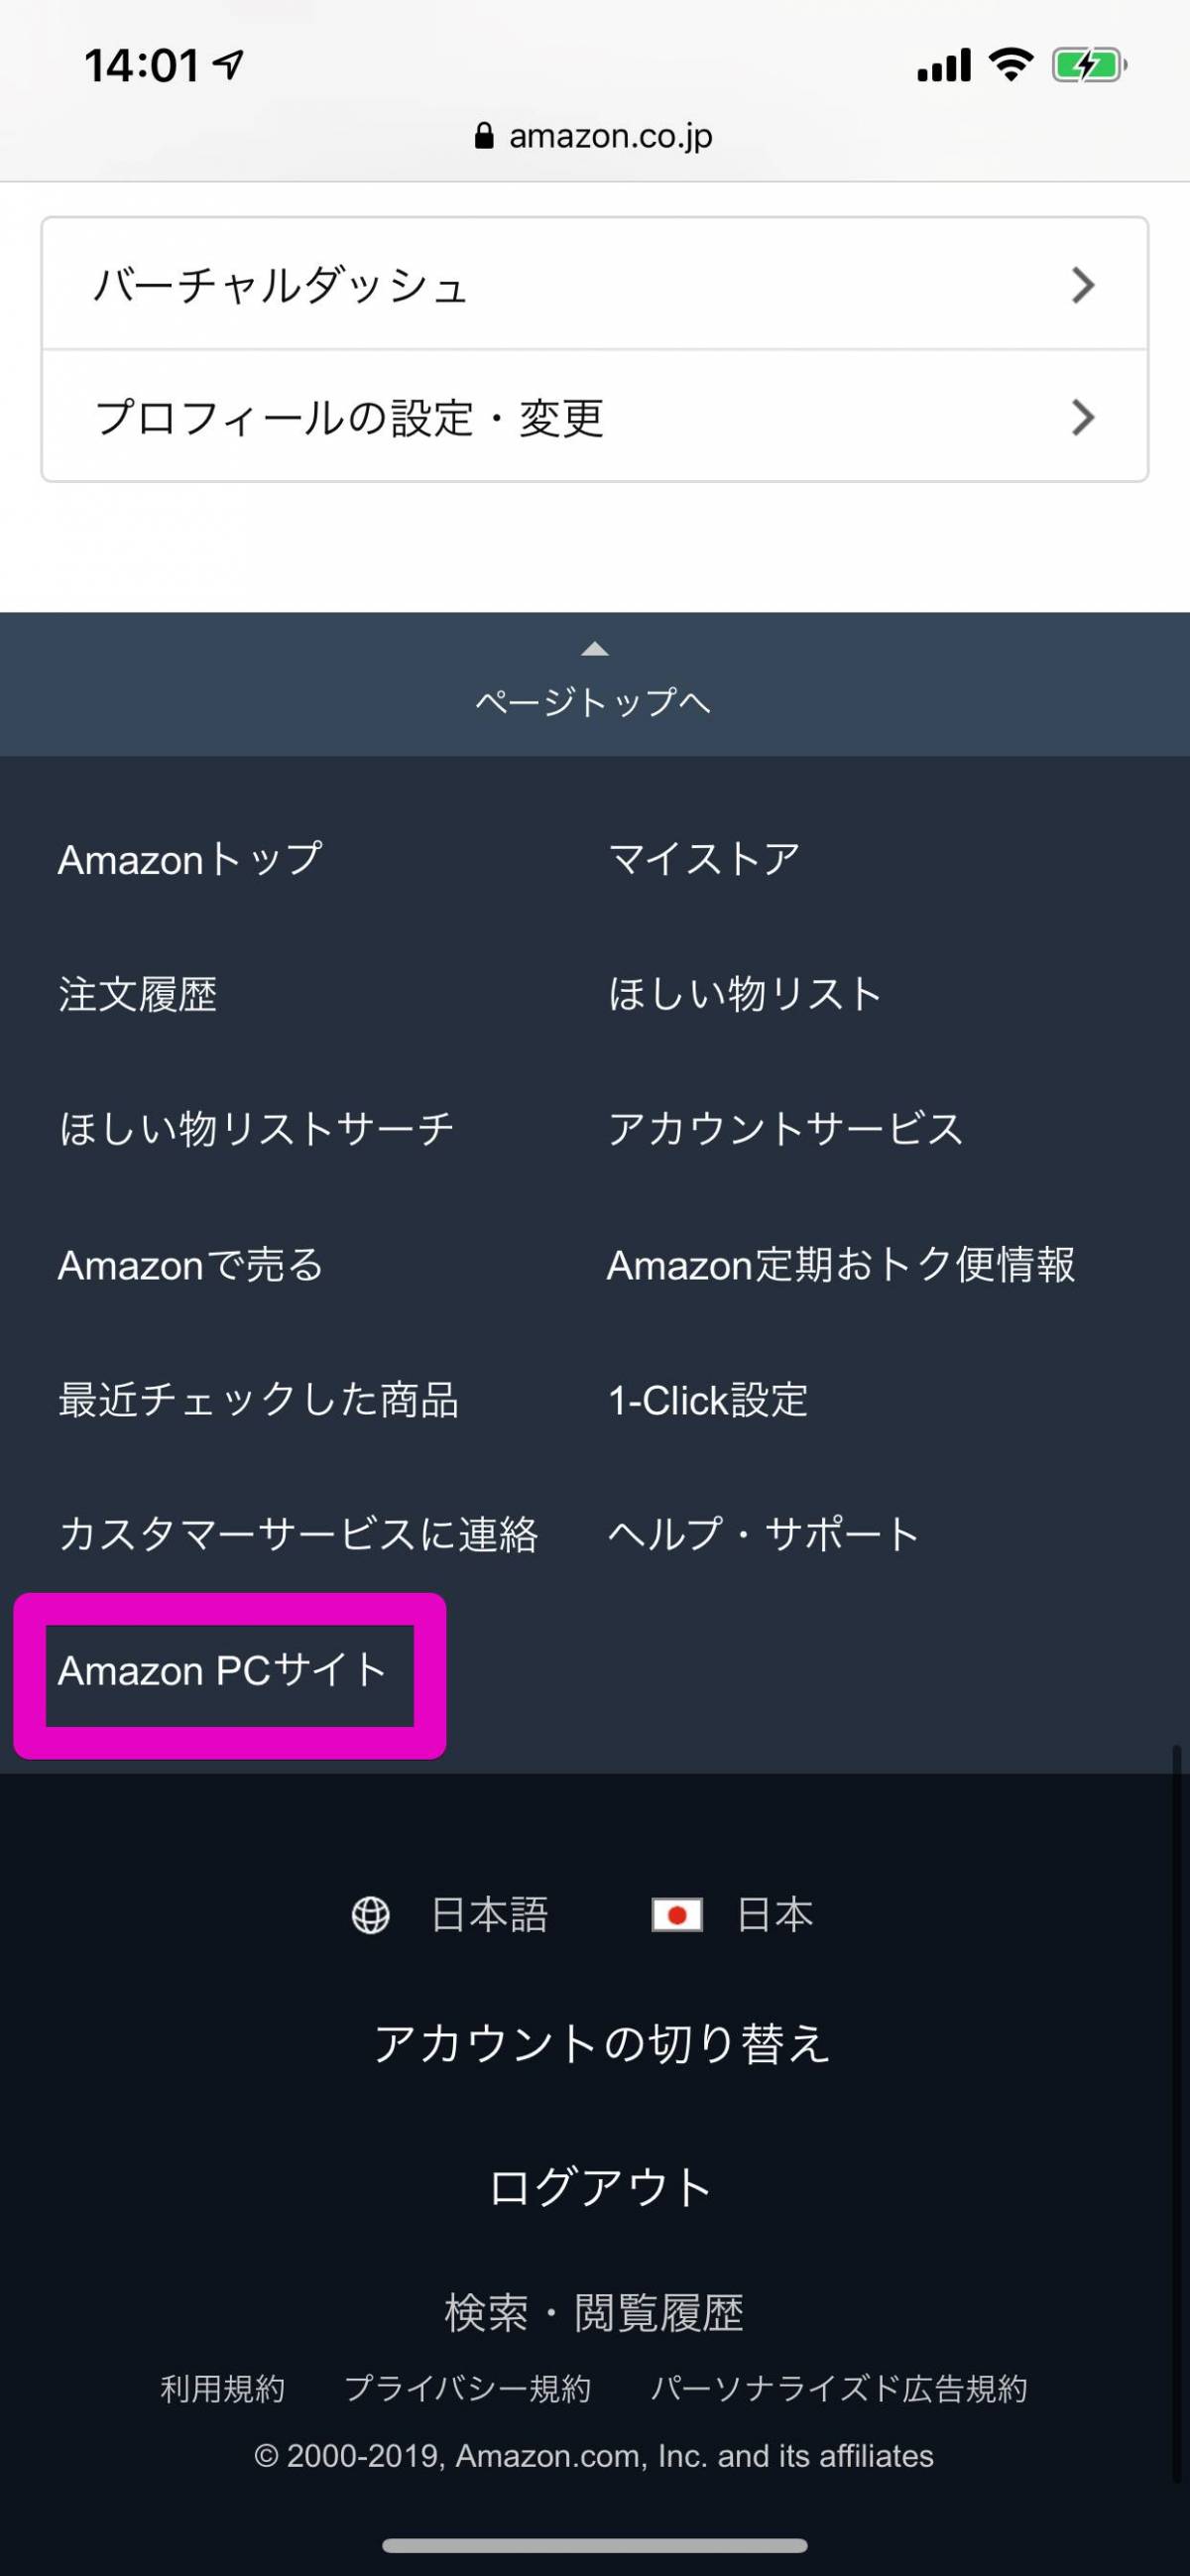 Amazonプライムビデオ 視聴履歴の確認 削除方法 スマホ Pc Fire Tv の画像 5枚目 Appliv Topics